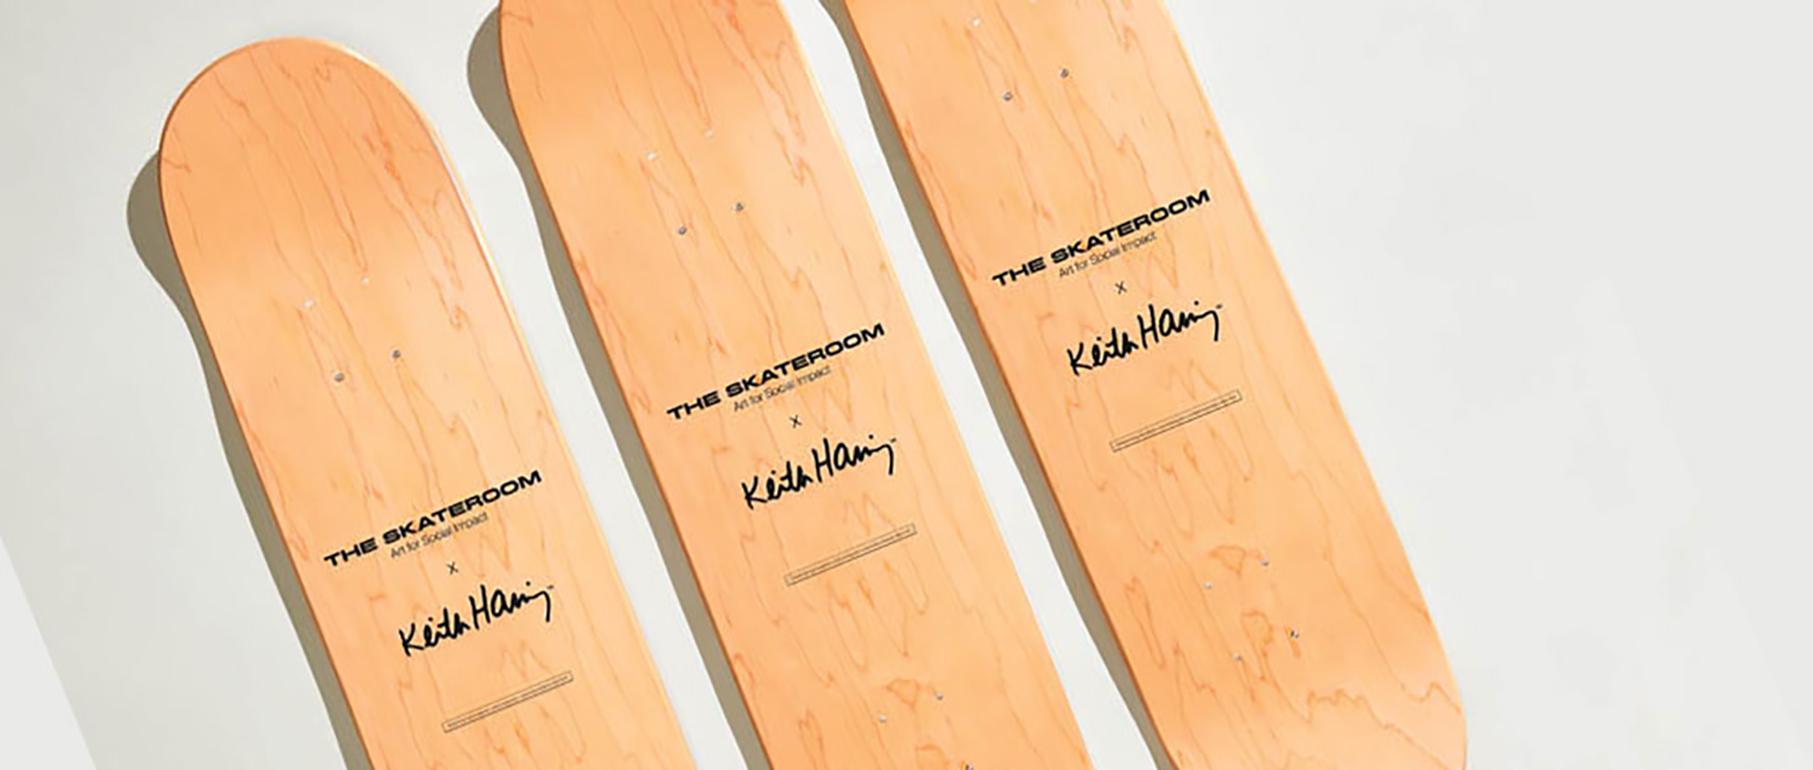 Belgian Retrospect Skateboard Decks after Keith Haring